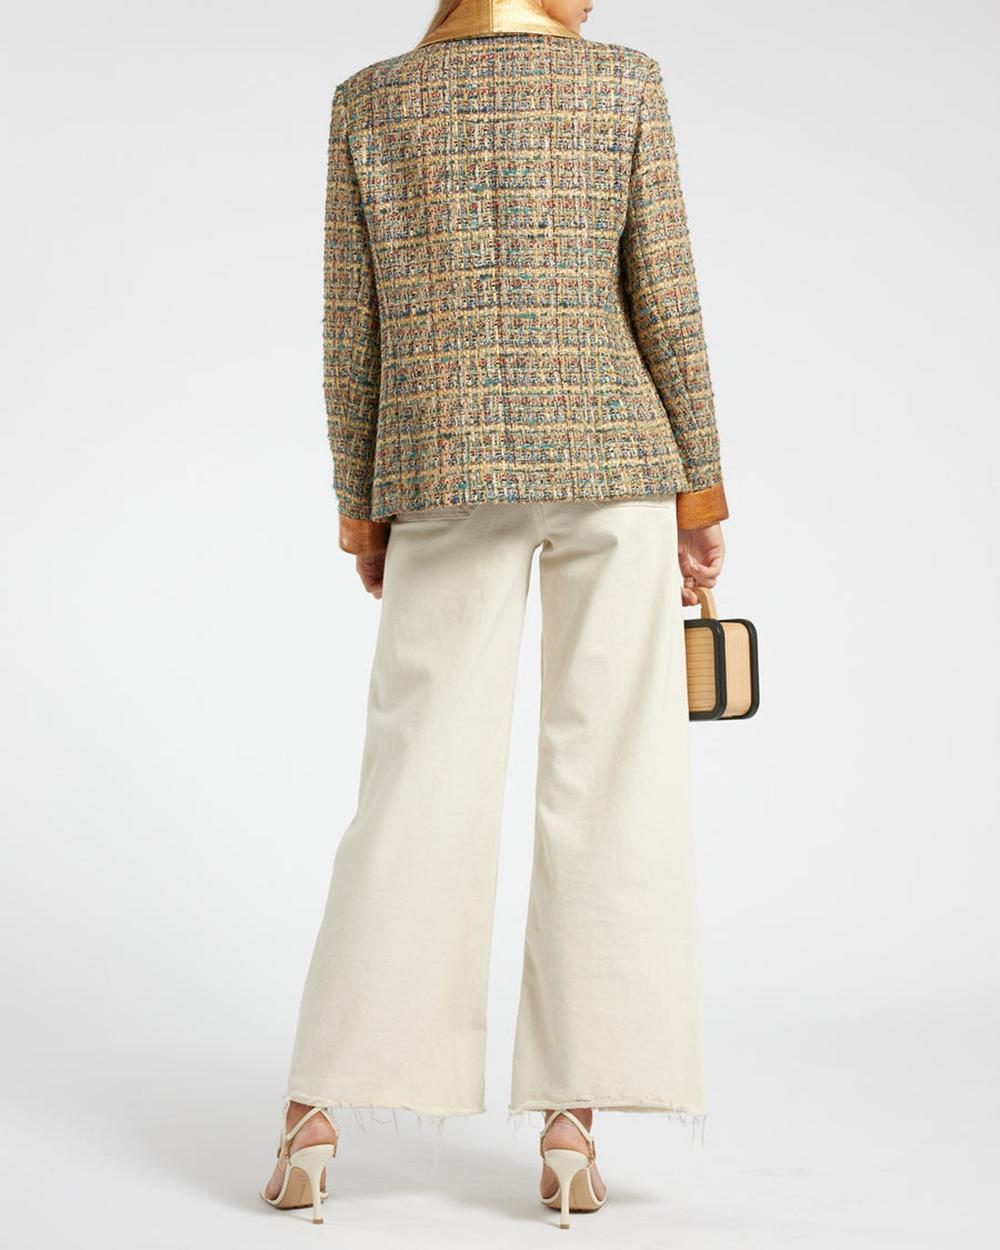 Chanel Kristem Stewart Style Paris / Egypt Tweed Jacket  For Sale 5